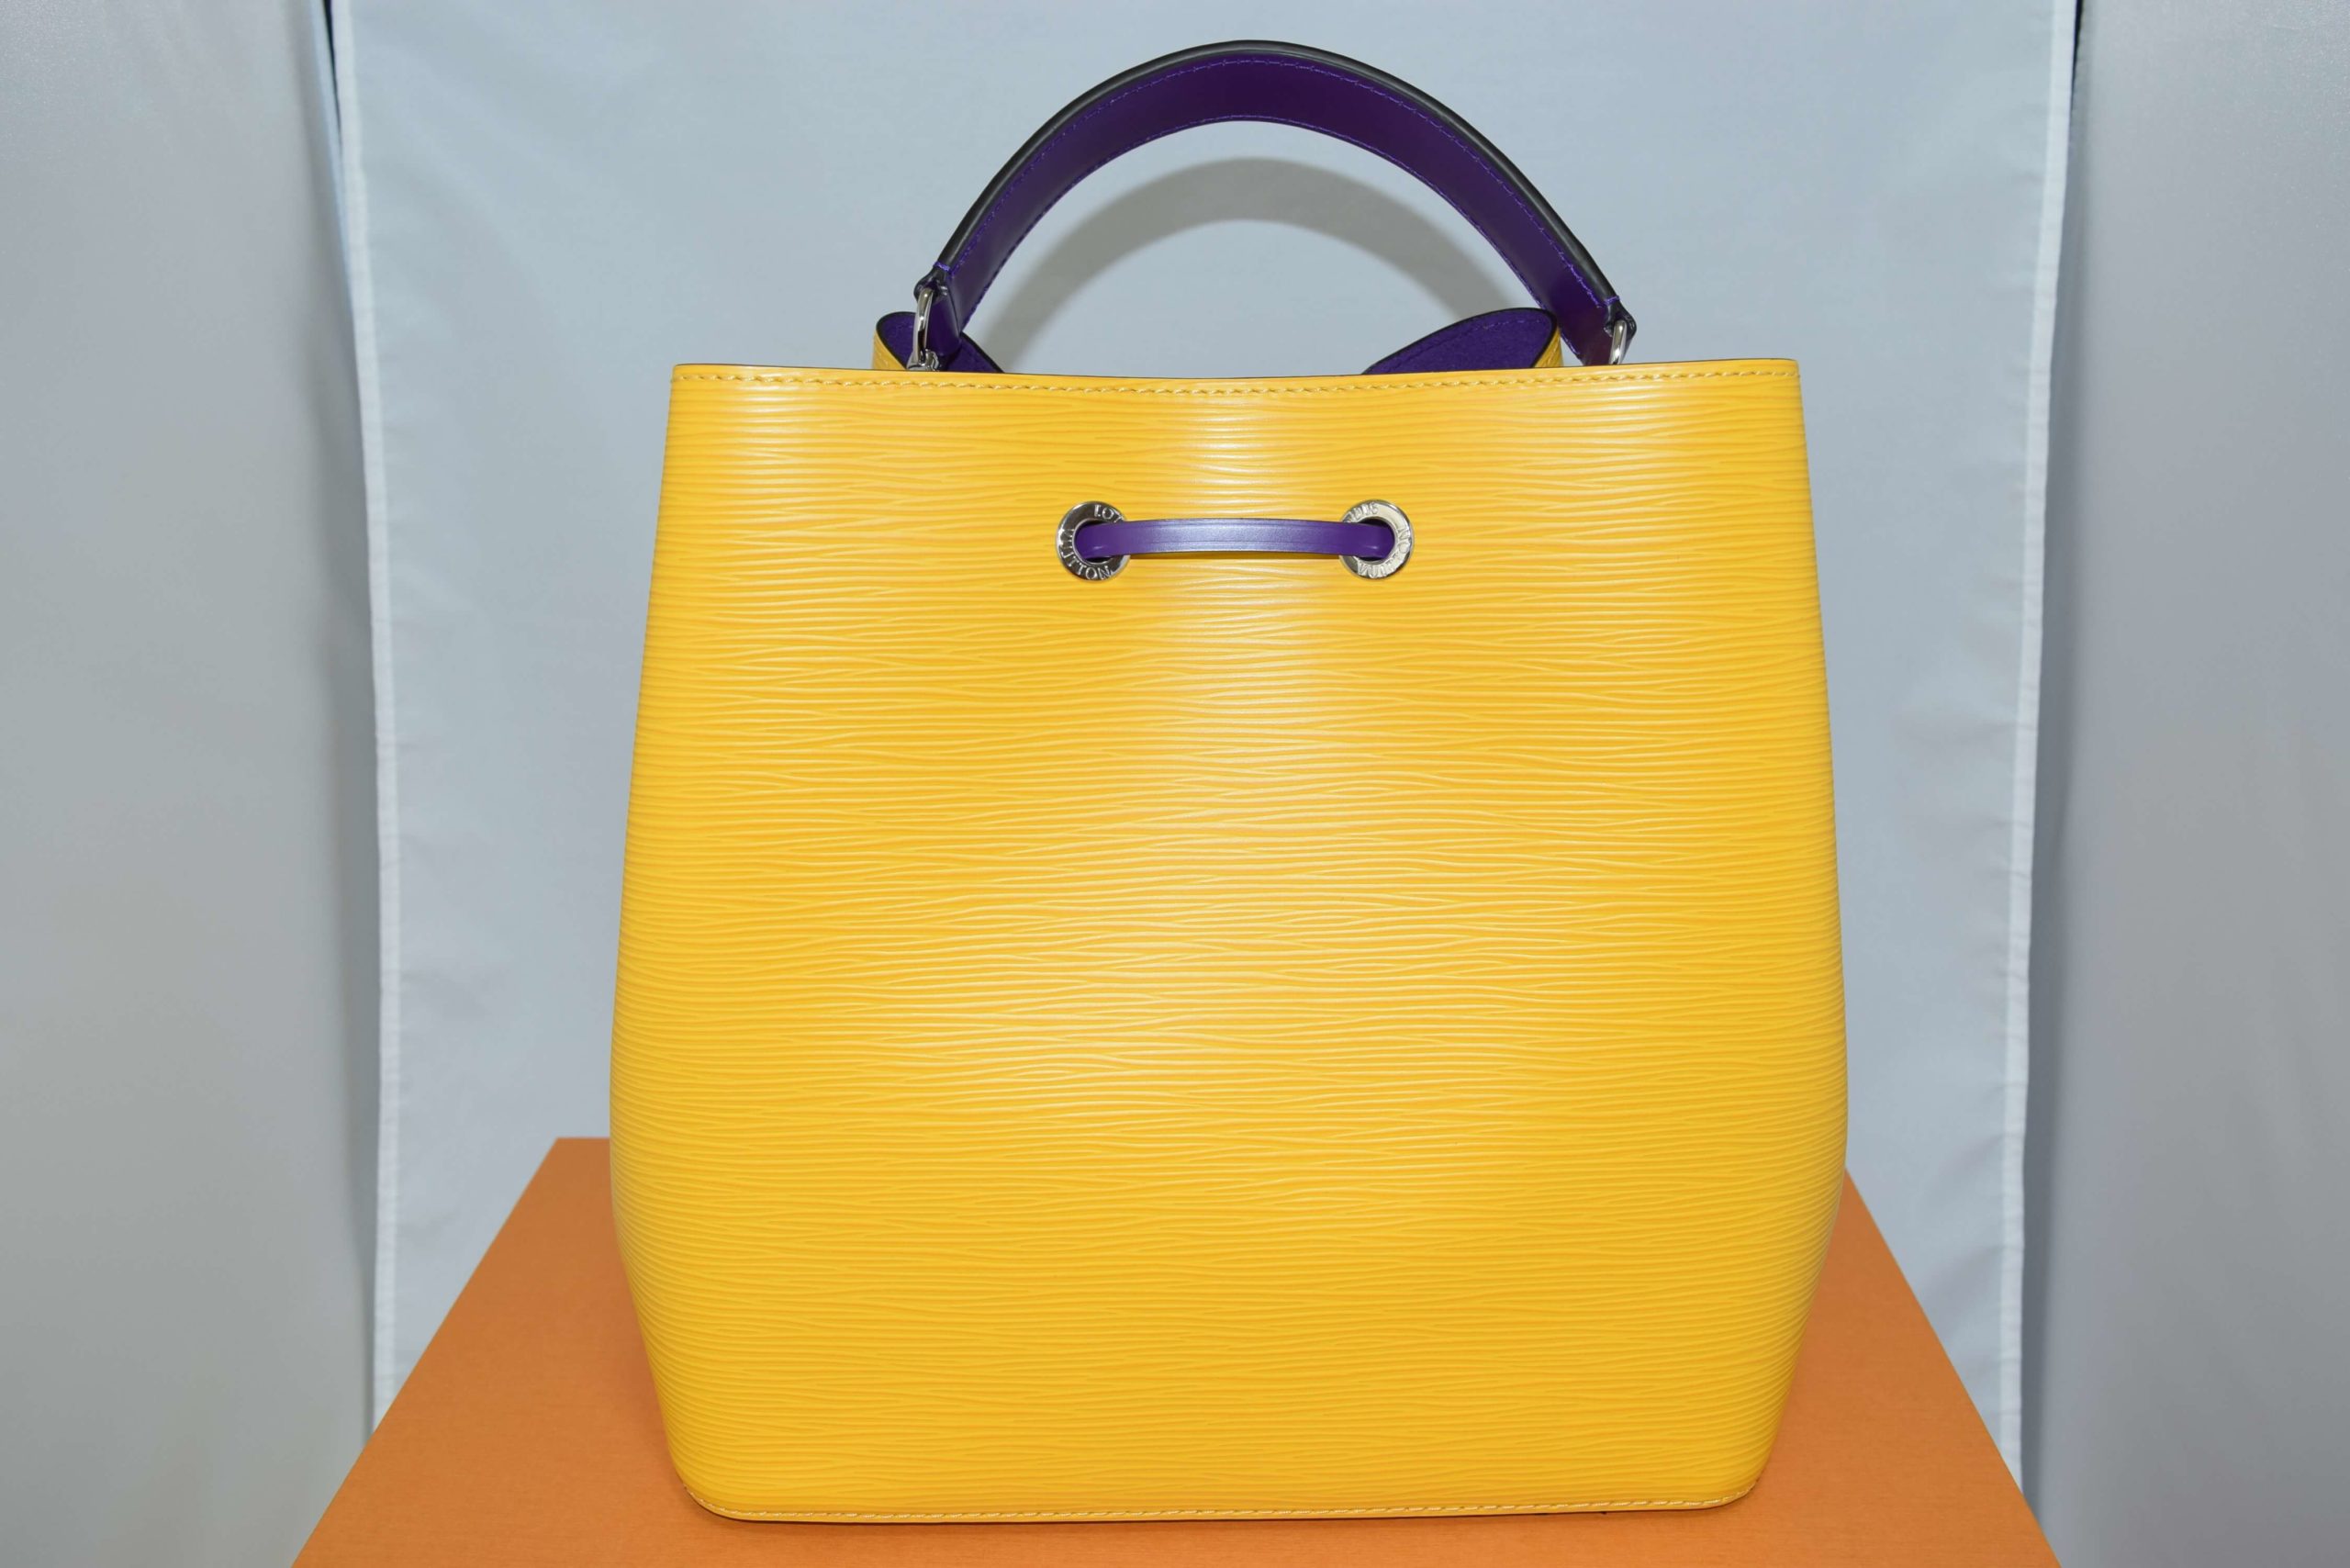 Louis Vuitton Neonoe Epi Leather Bag Yellow purple handbag – art